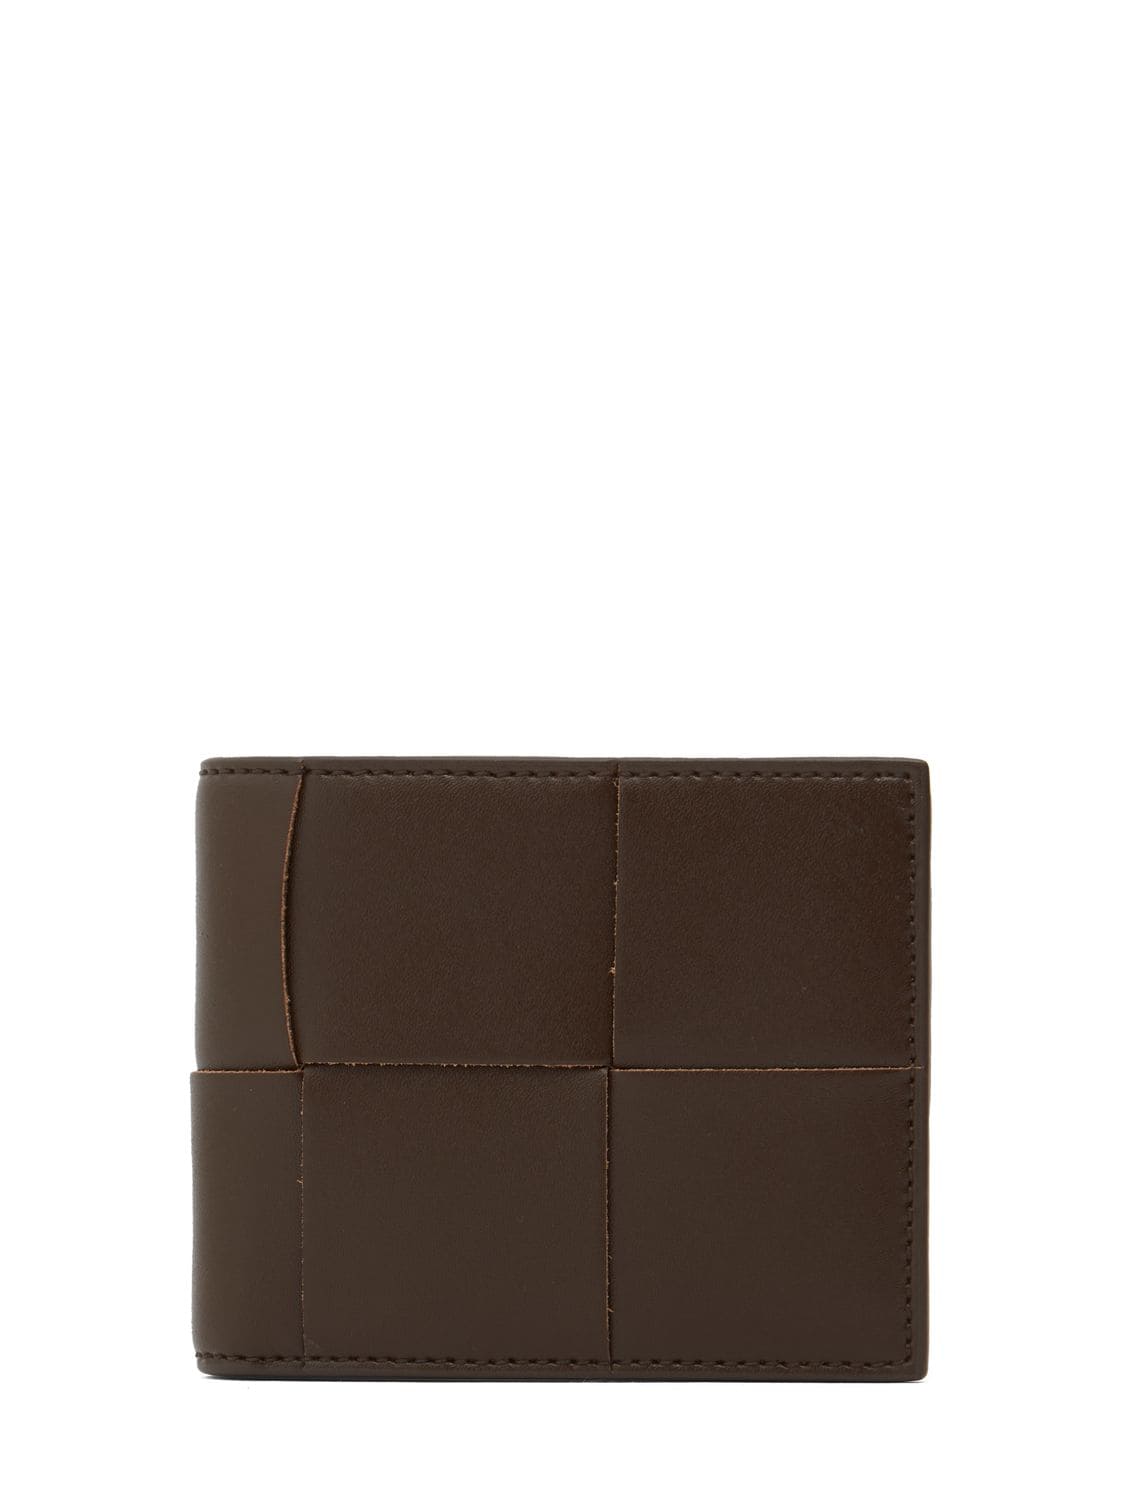 Image of Intreccio Leather Wallet